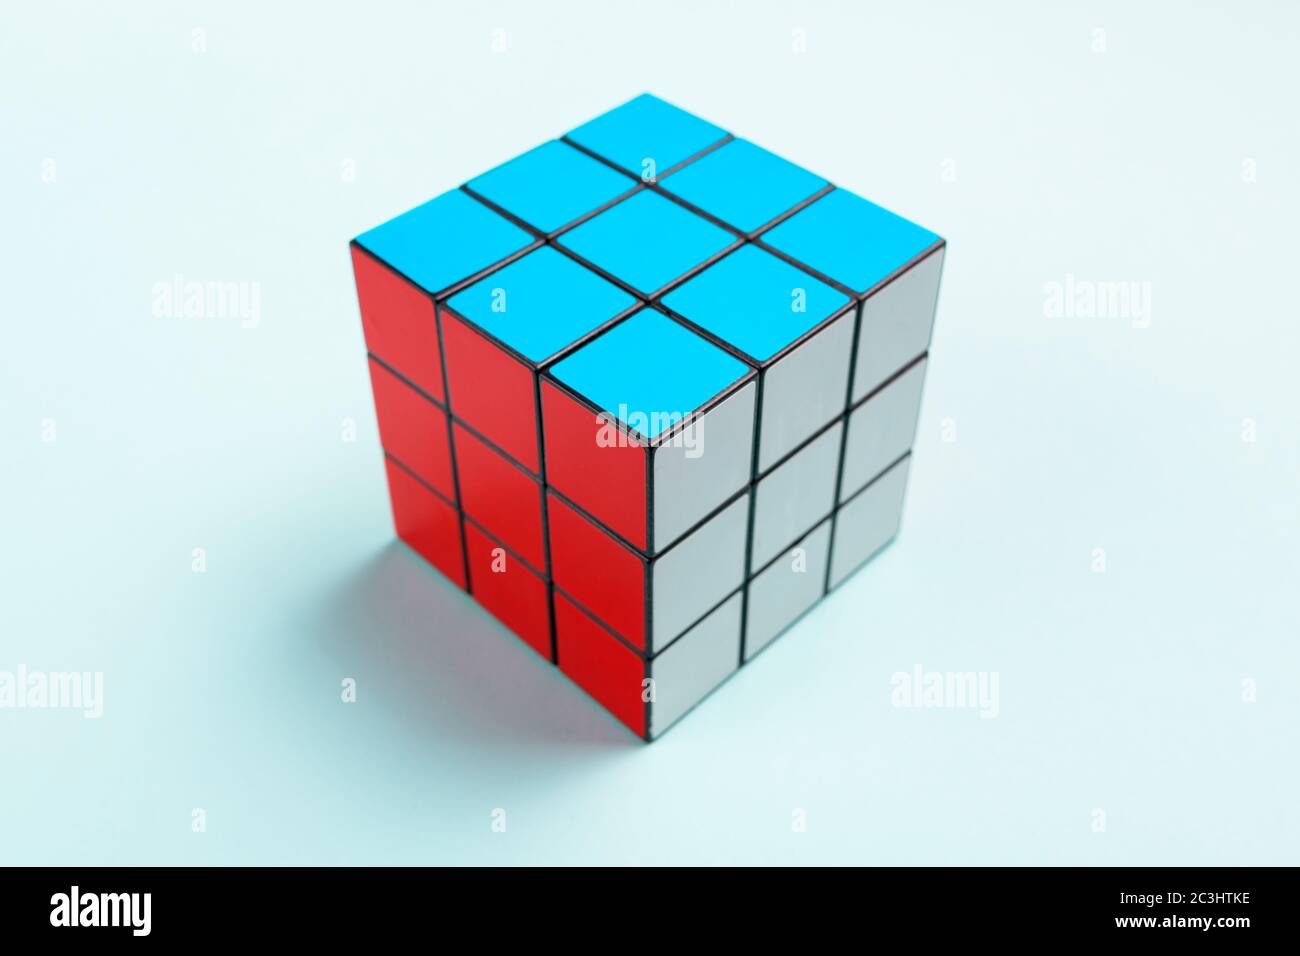 NOVI SAD, SERBIA - JUNE 10, 2018: Rubik's Cube, originally called Magic cube, invented by a Hungarian sculptor and professor of architecture Erno Rubi Stock Photo